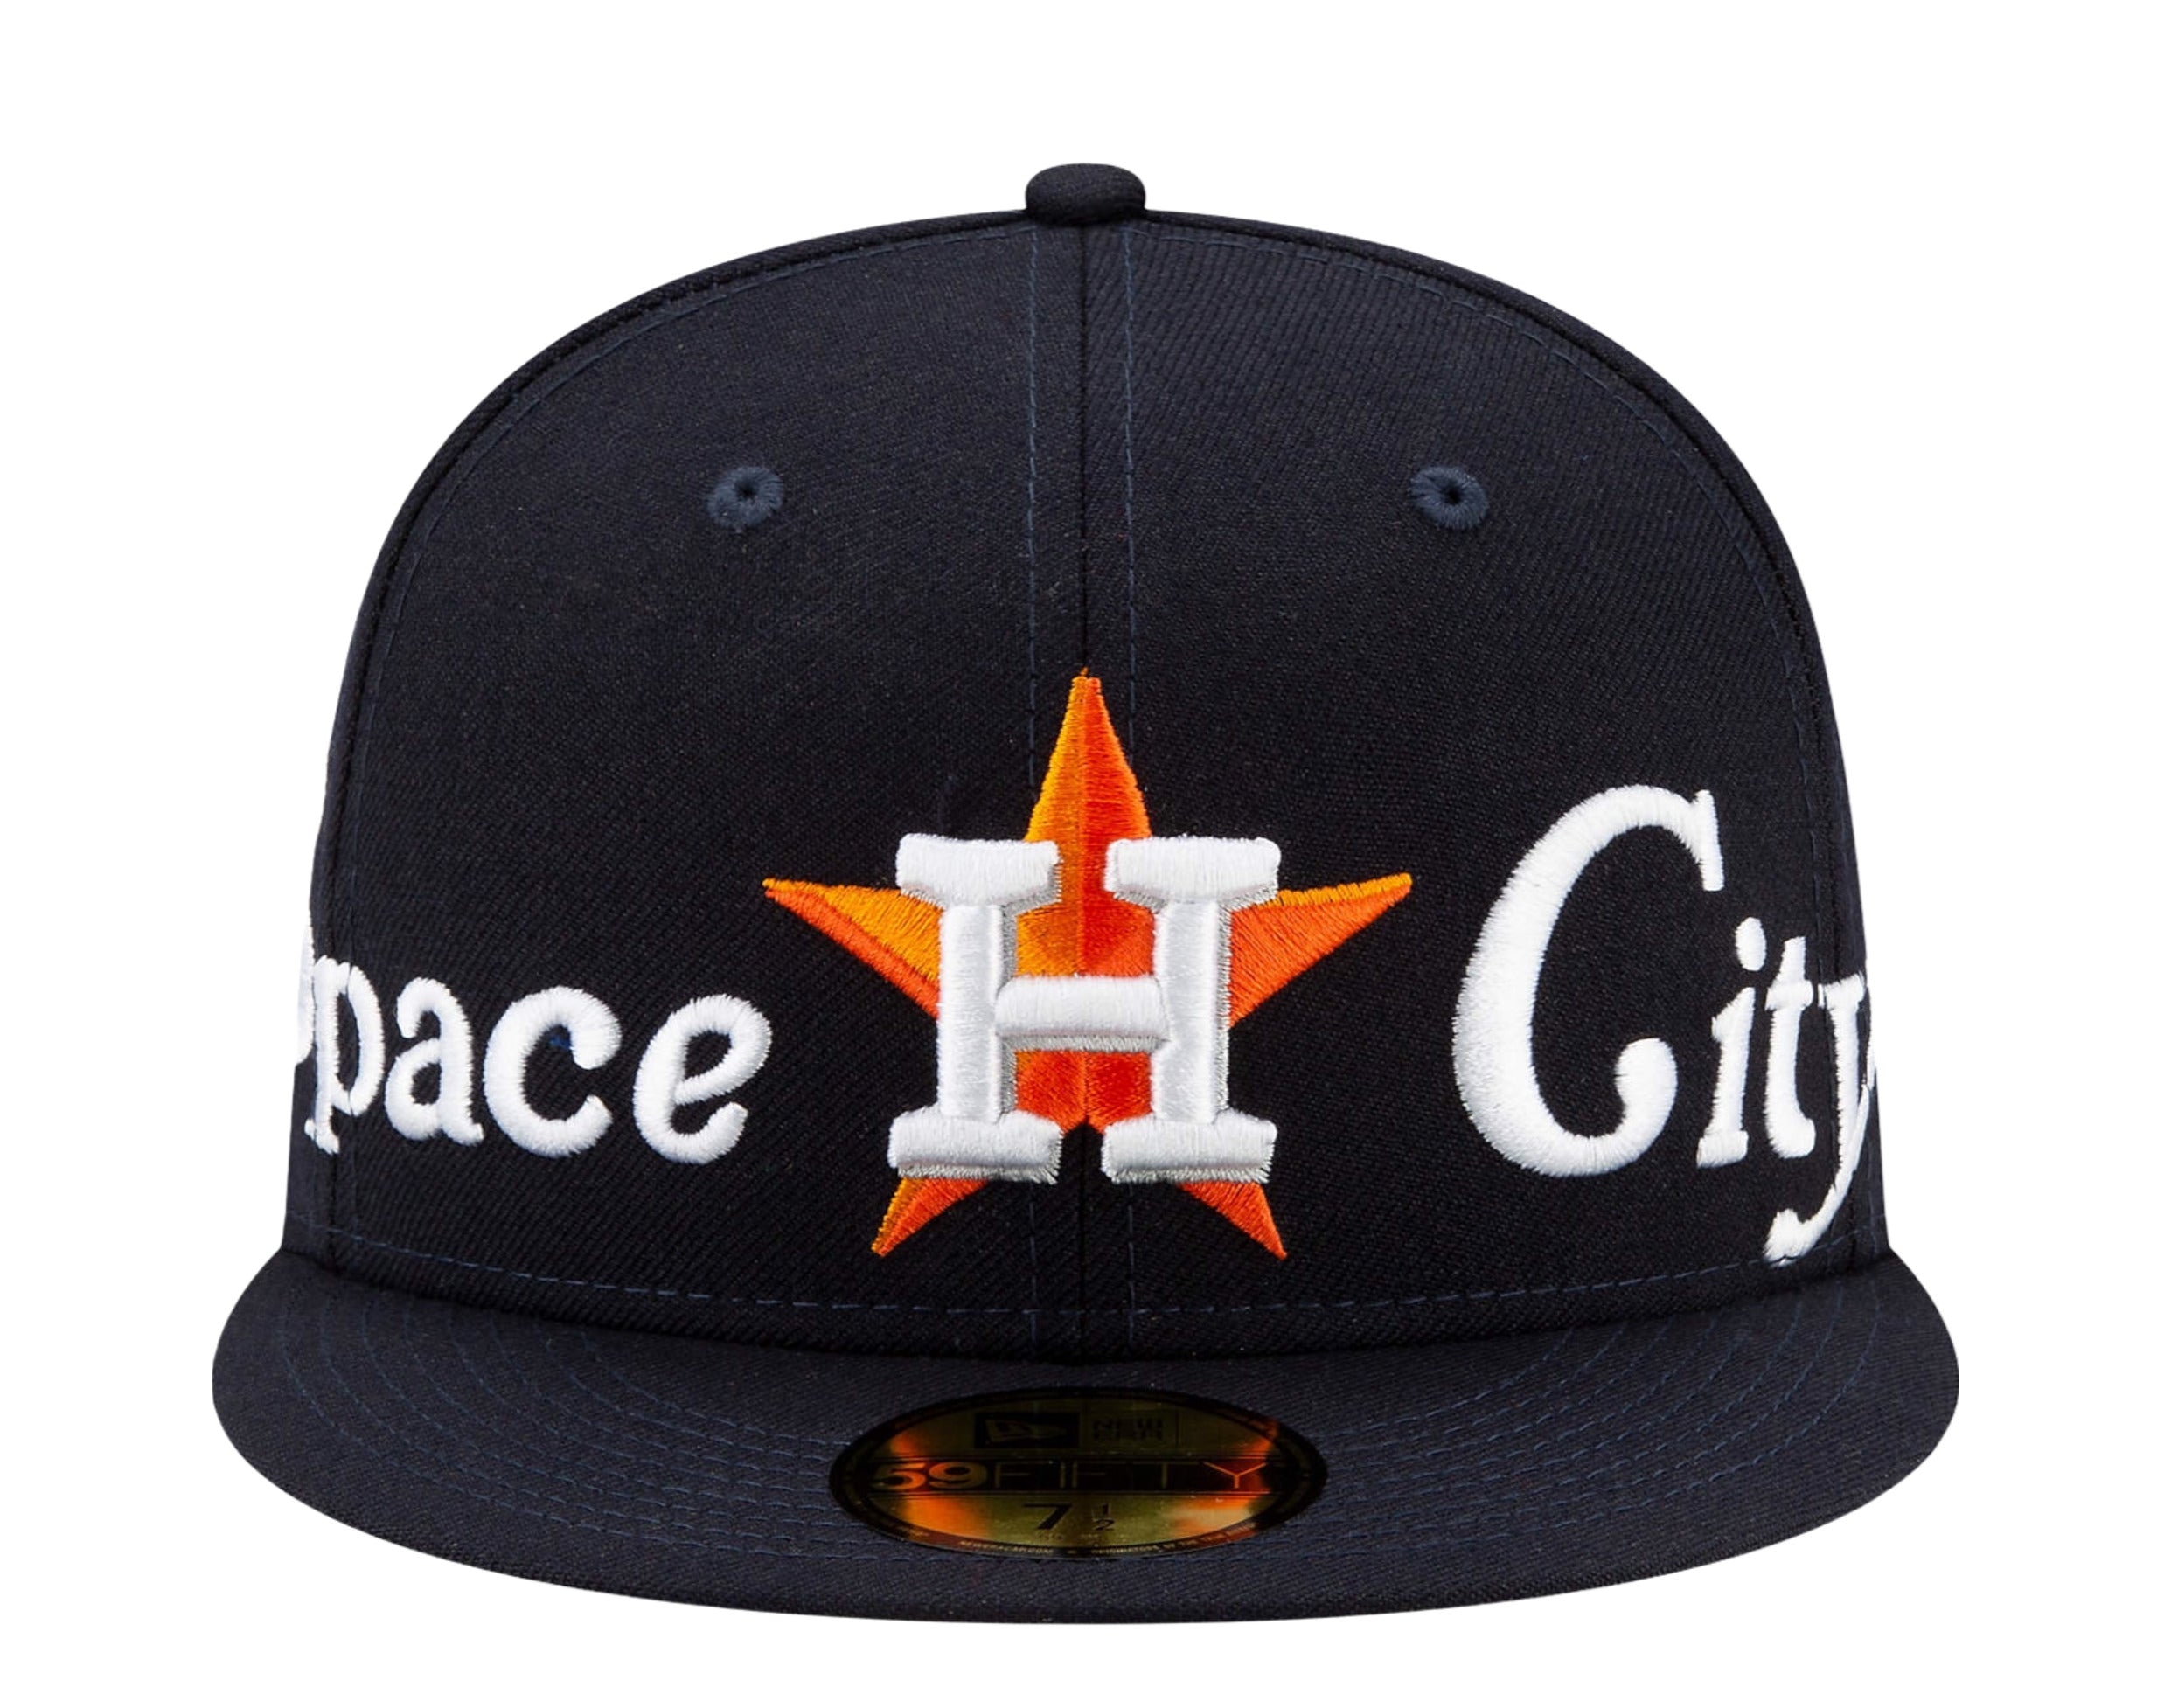 Houston Astros 5950 Q4 QT Space City - Eight One